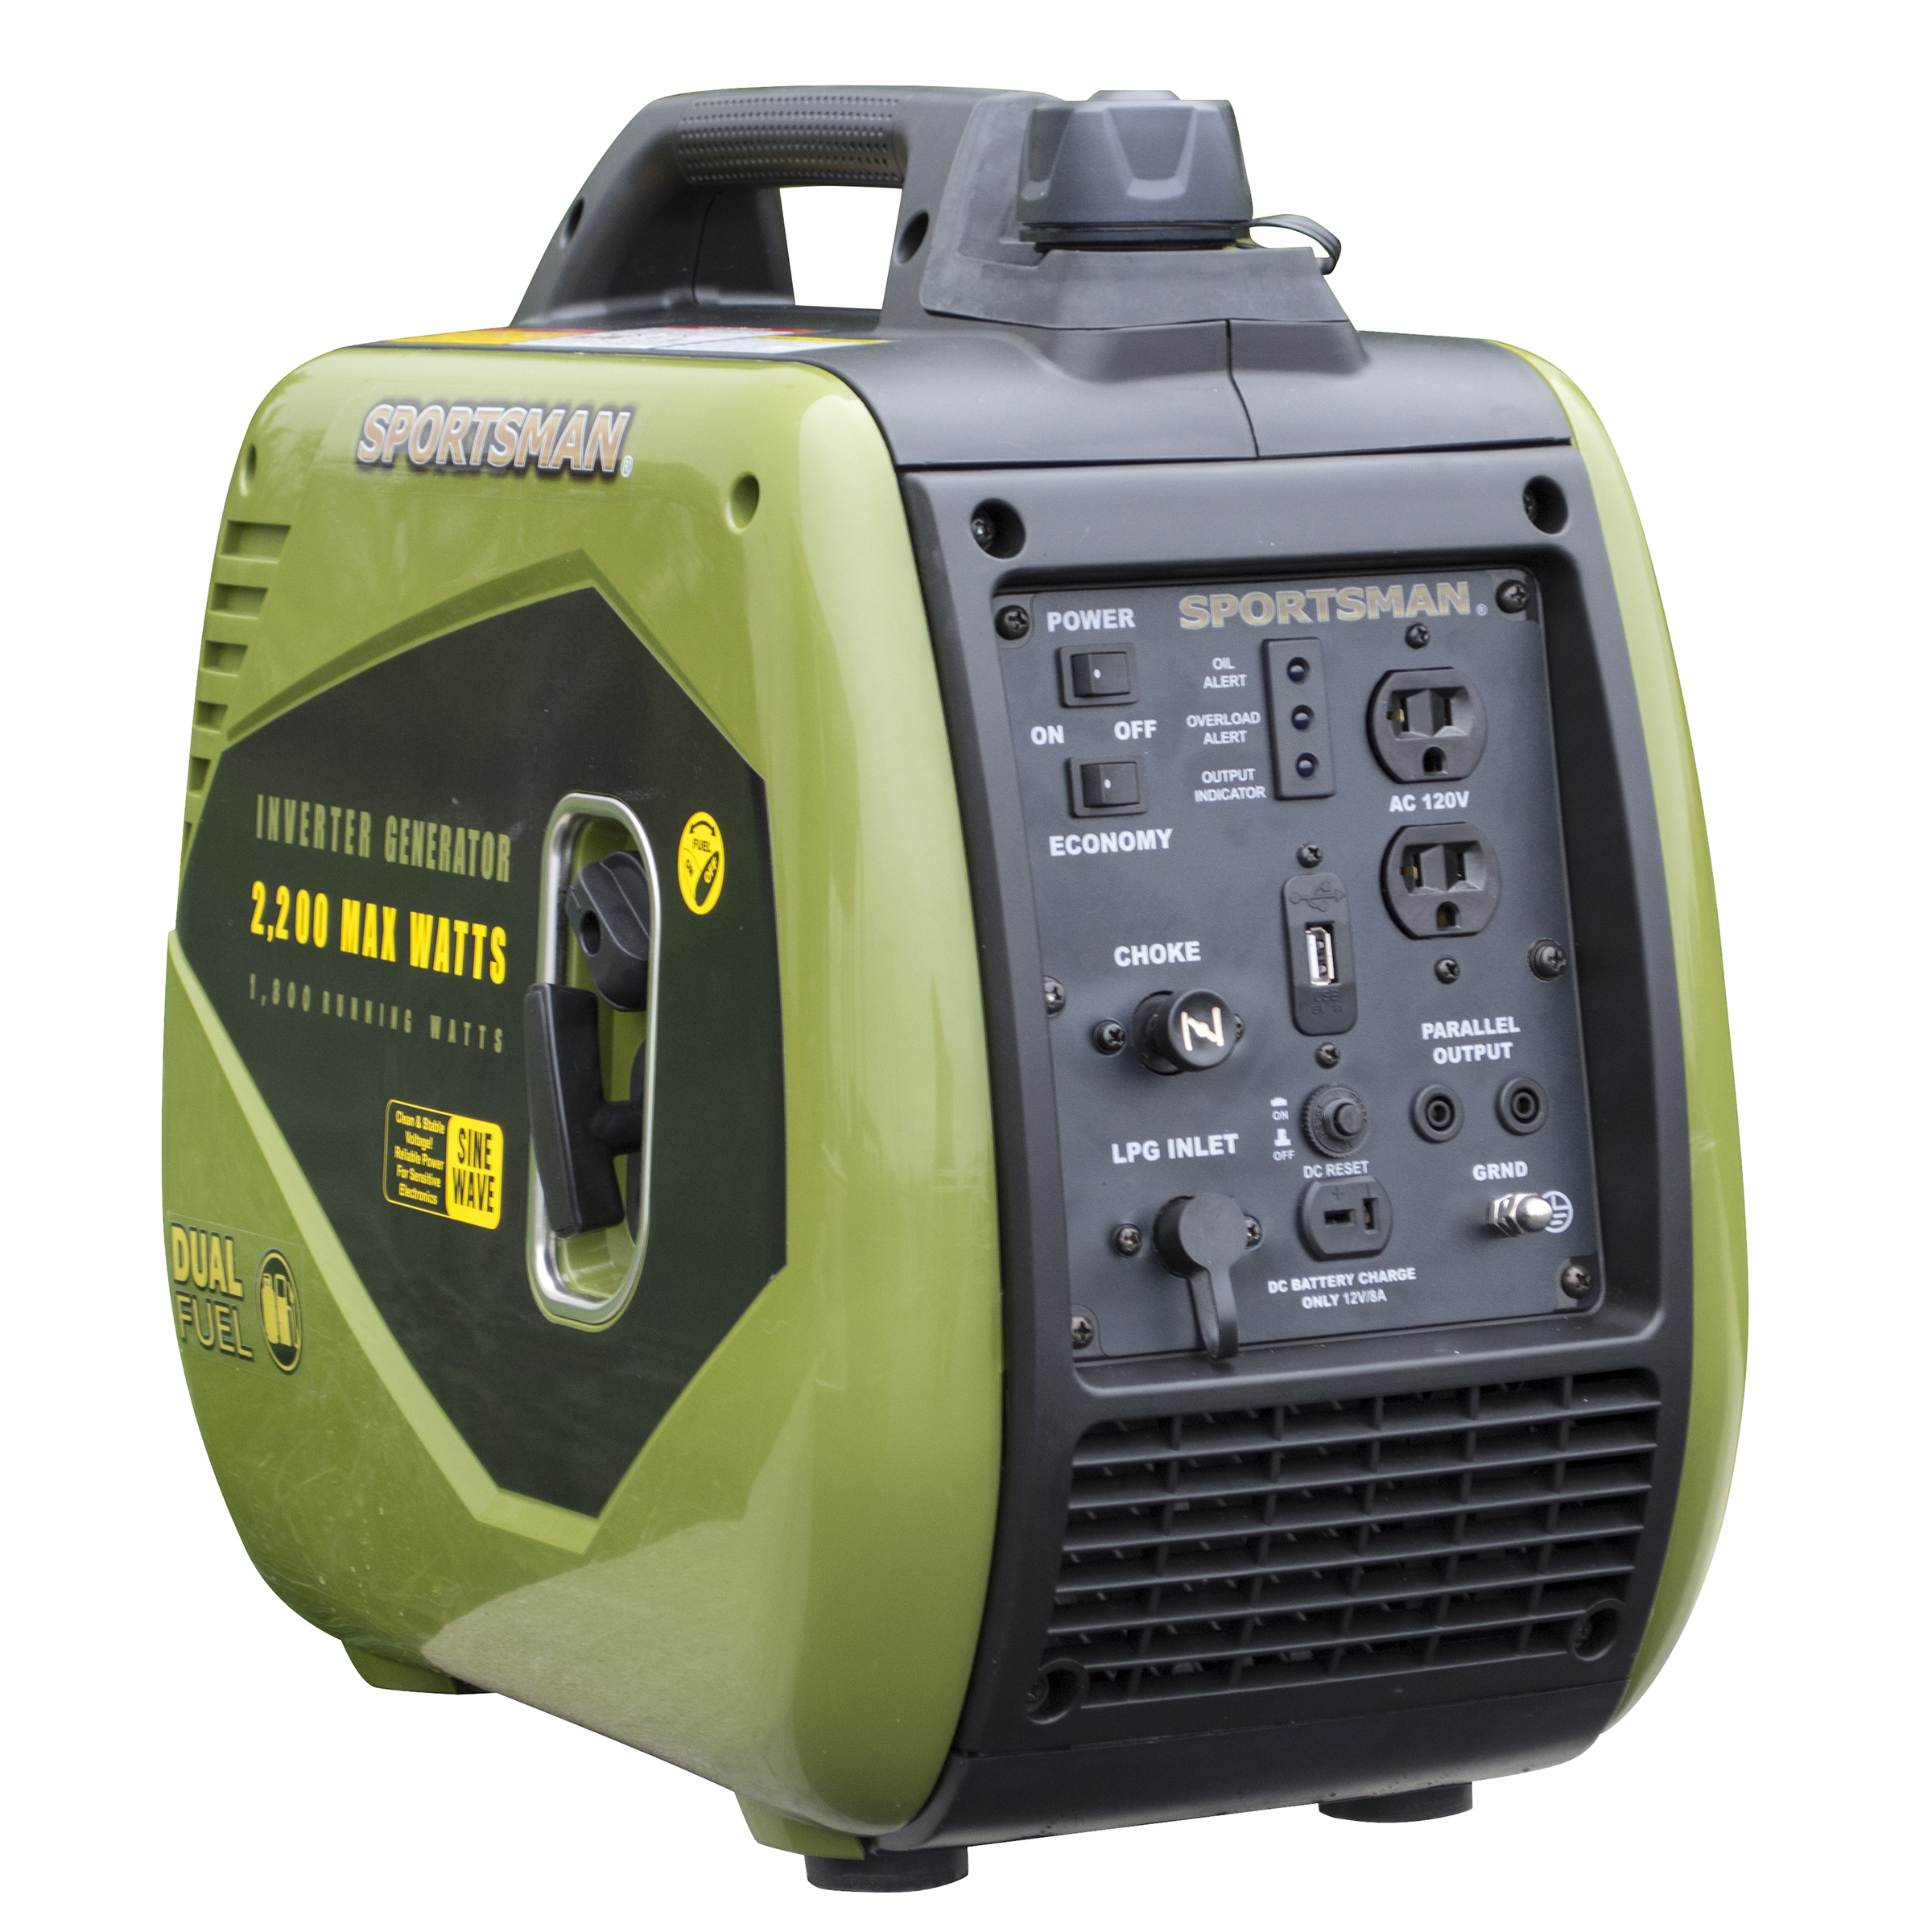 Sportsman 2200 Watt Dual Fuel Inverter Generator for Sensitive Electronics - image 4 of 9